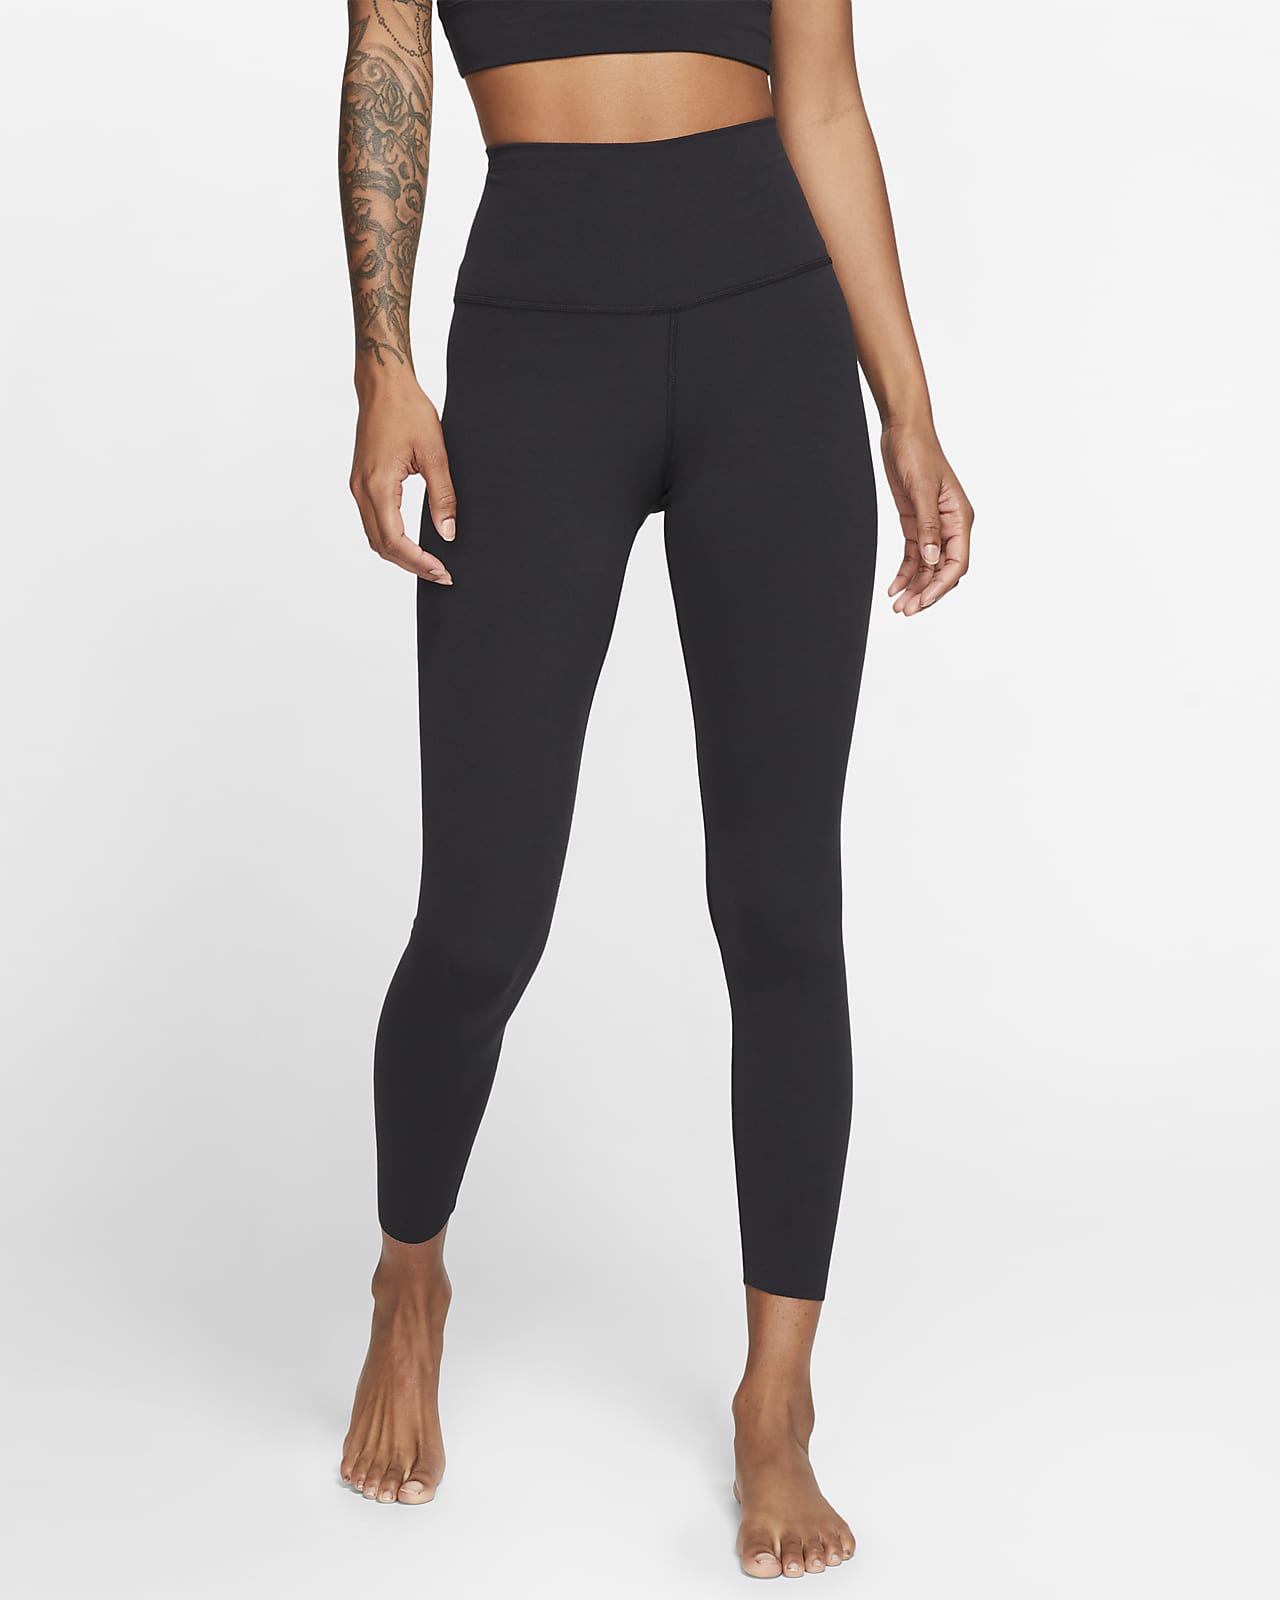 Nike Yoga Luxe 7/8 女子高腰紧身裤